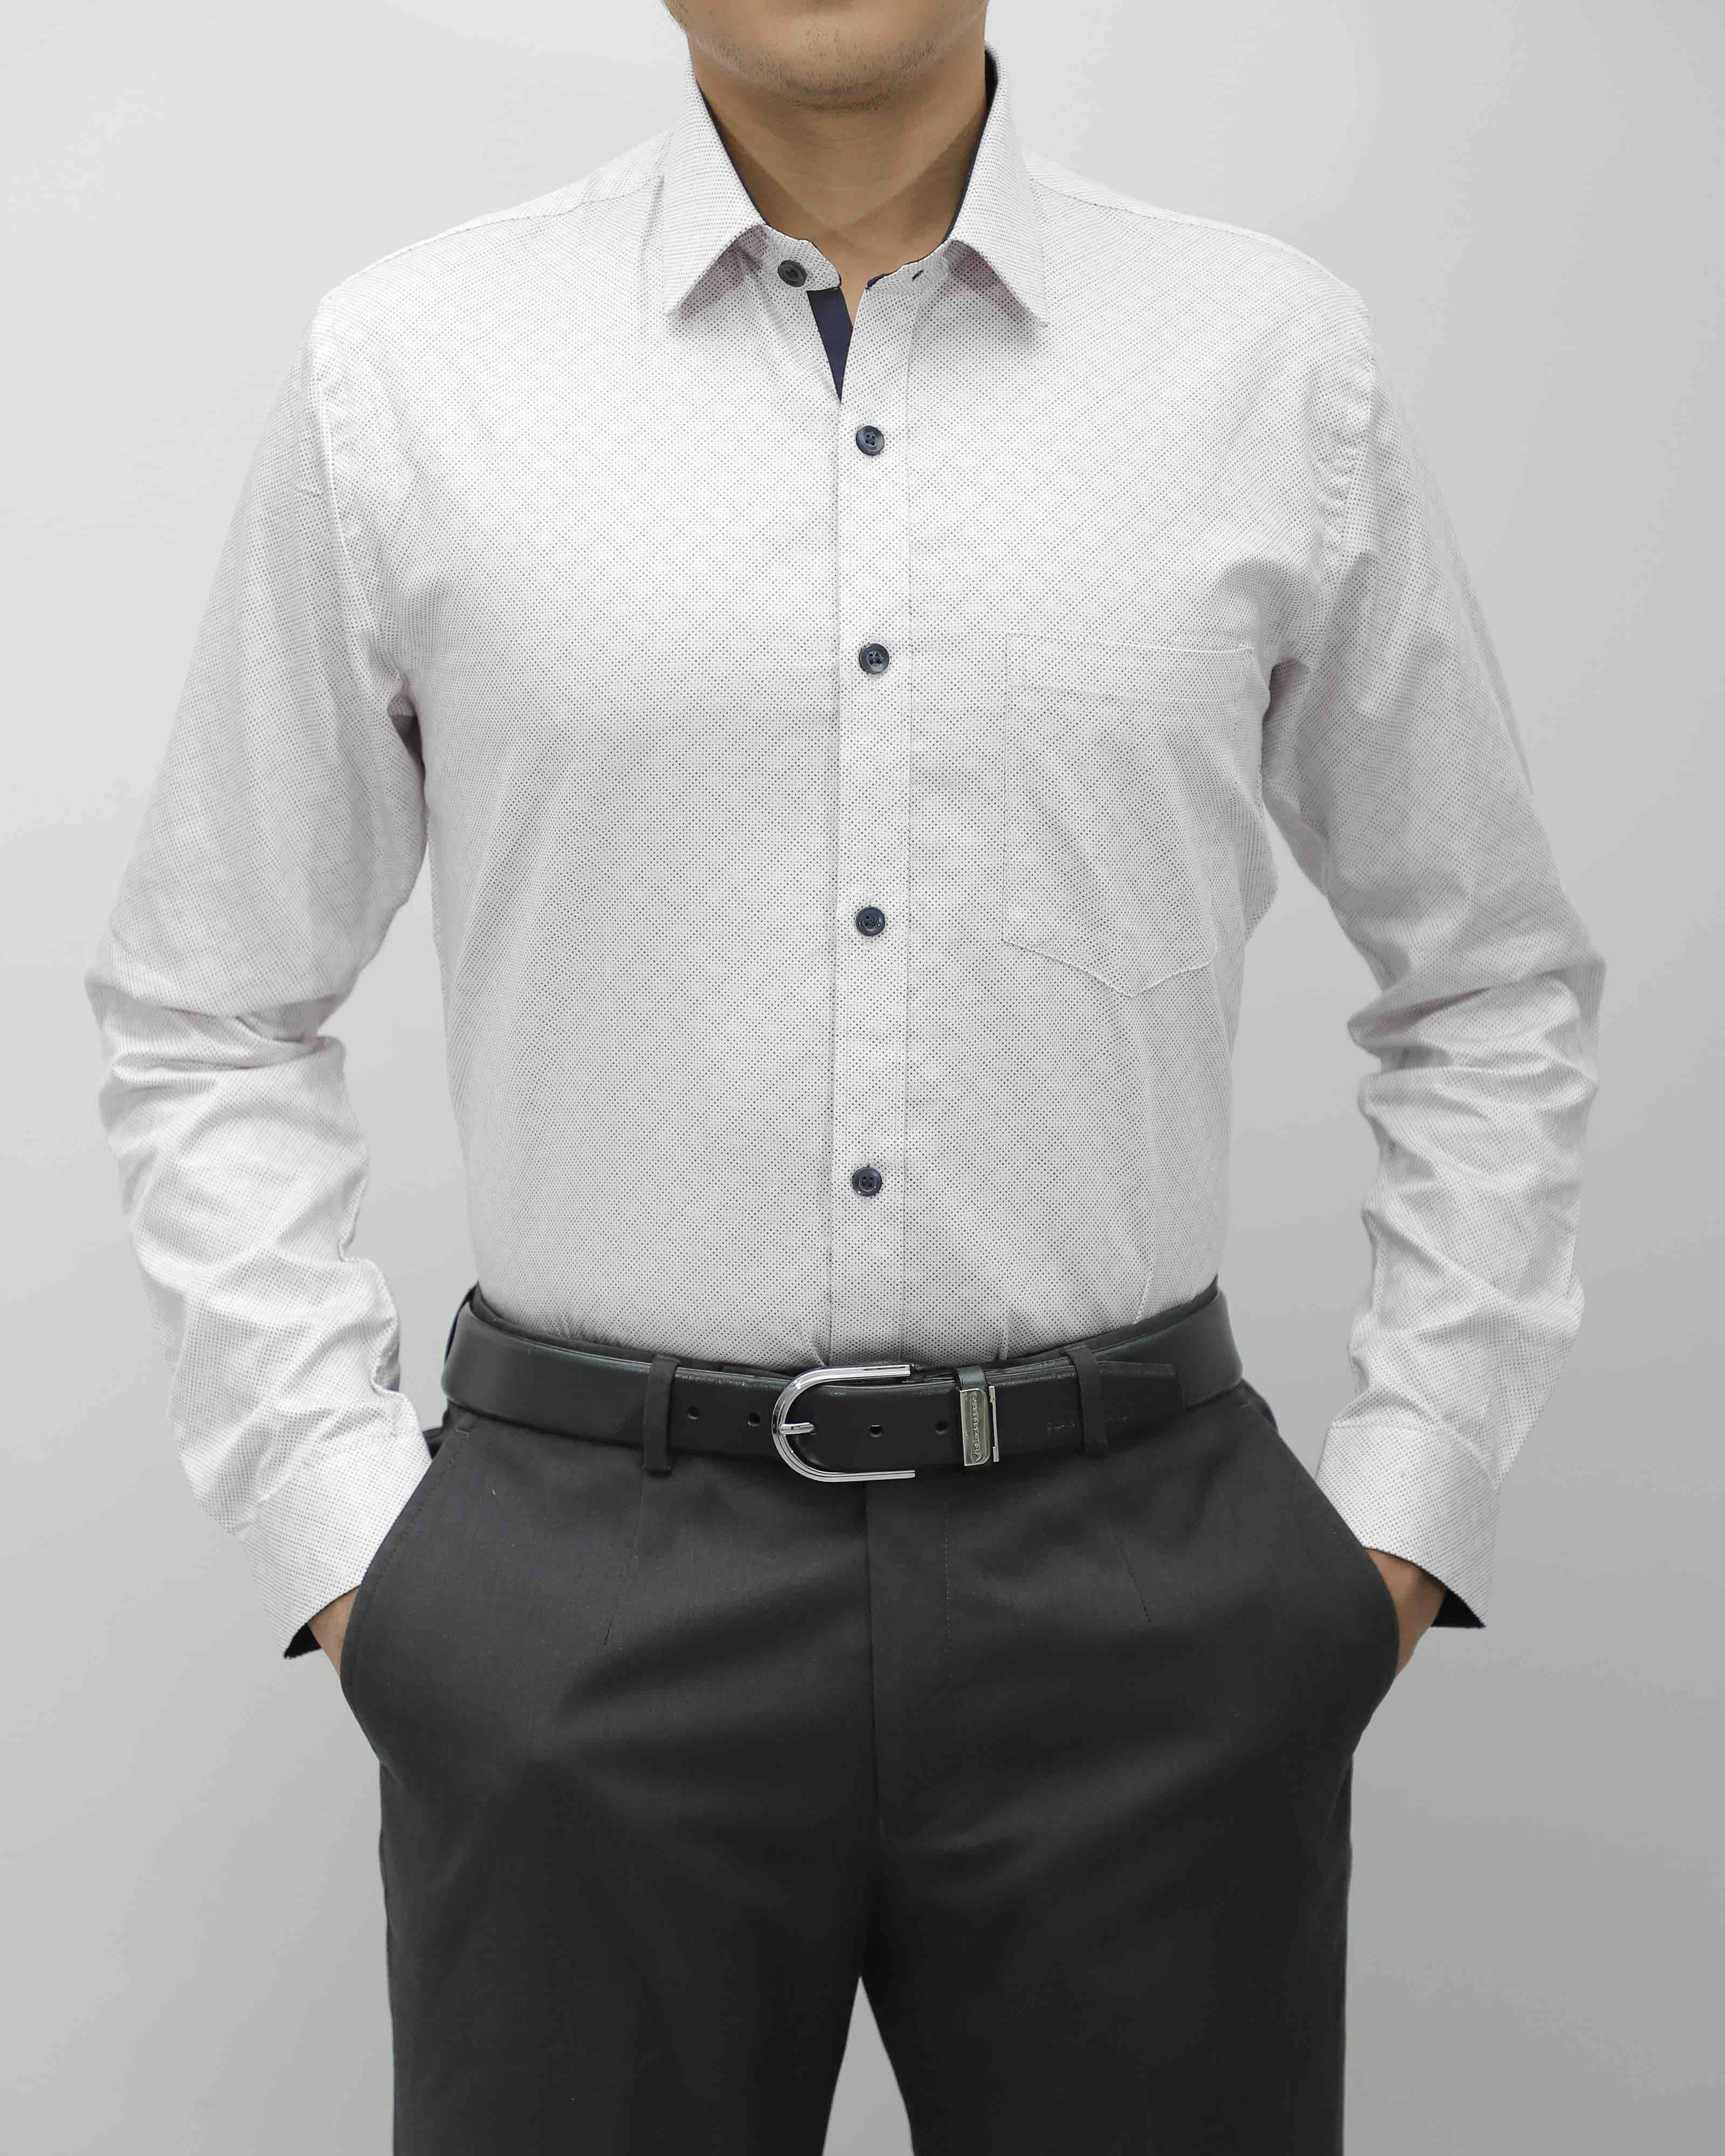 White-shirt-linen-positano-zodiac-product | Zodiac Clothing:… | Flickr